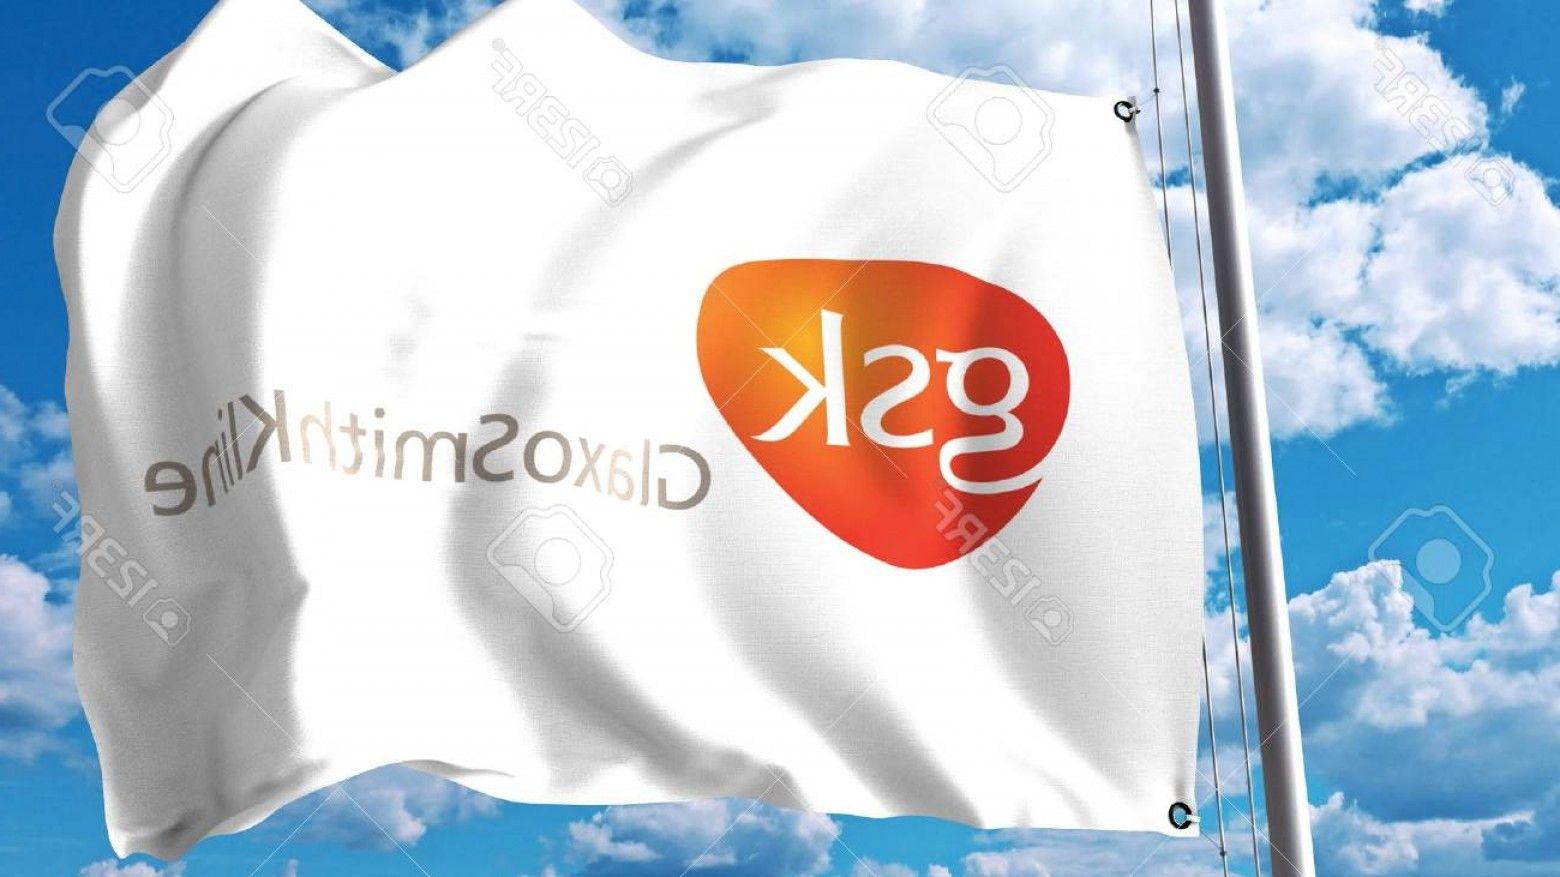 GlaxoSmithKline Logo - Photowaving Flag With Glaxosmithkline Gsk Logo Against Clouds